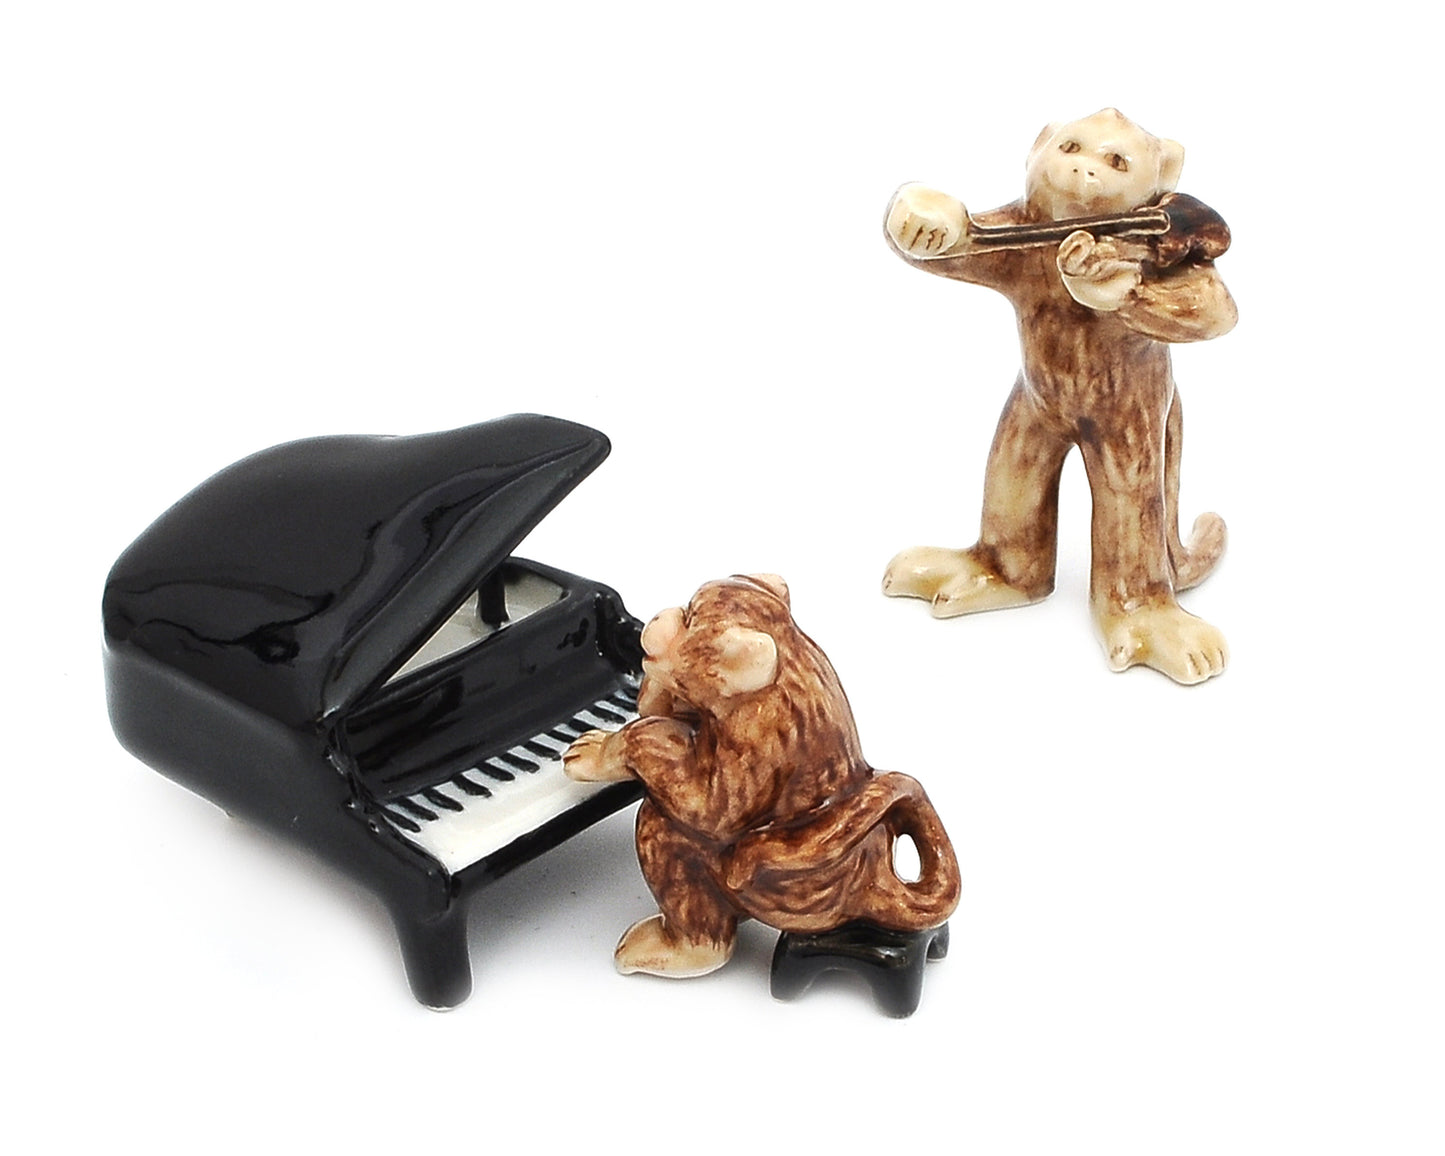 Monkey Music Band Handmade Ceramic Figurine Miniature Decor/Animal Collection